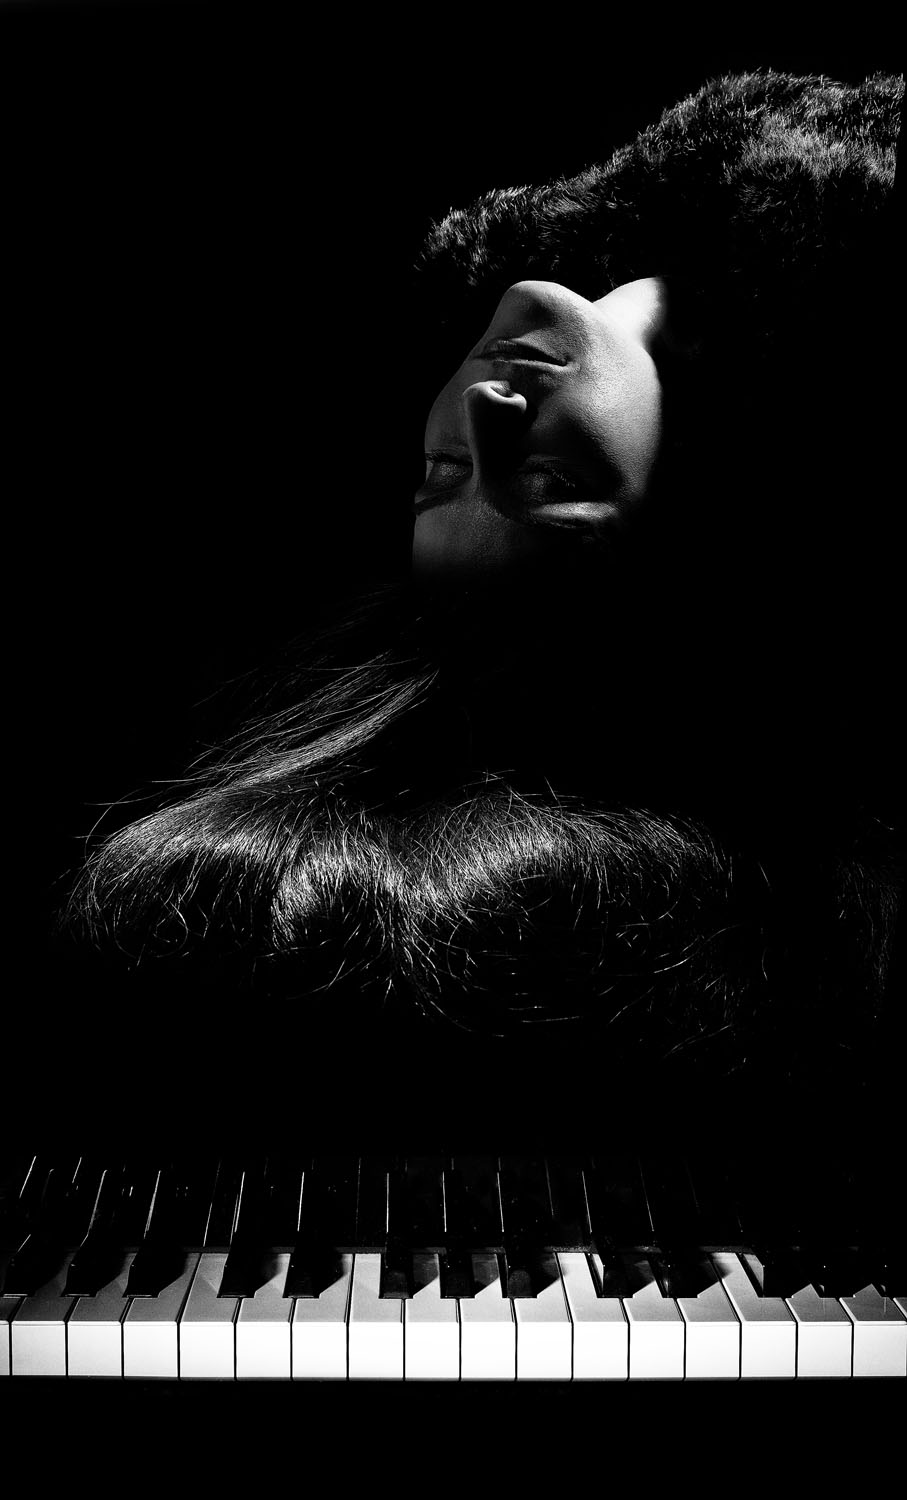 Nadine_on_piano_final_composite.jpg